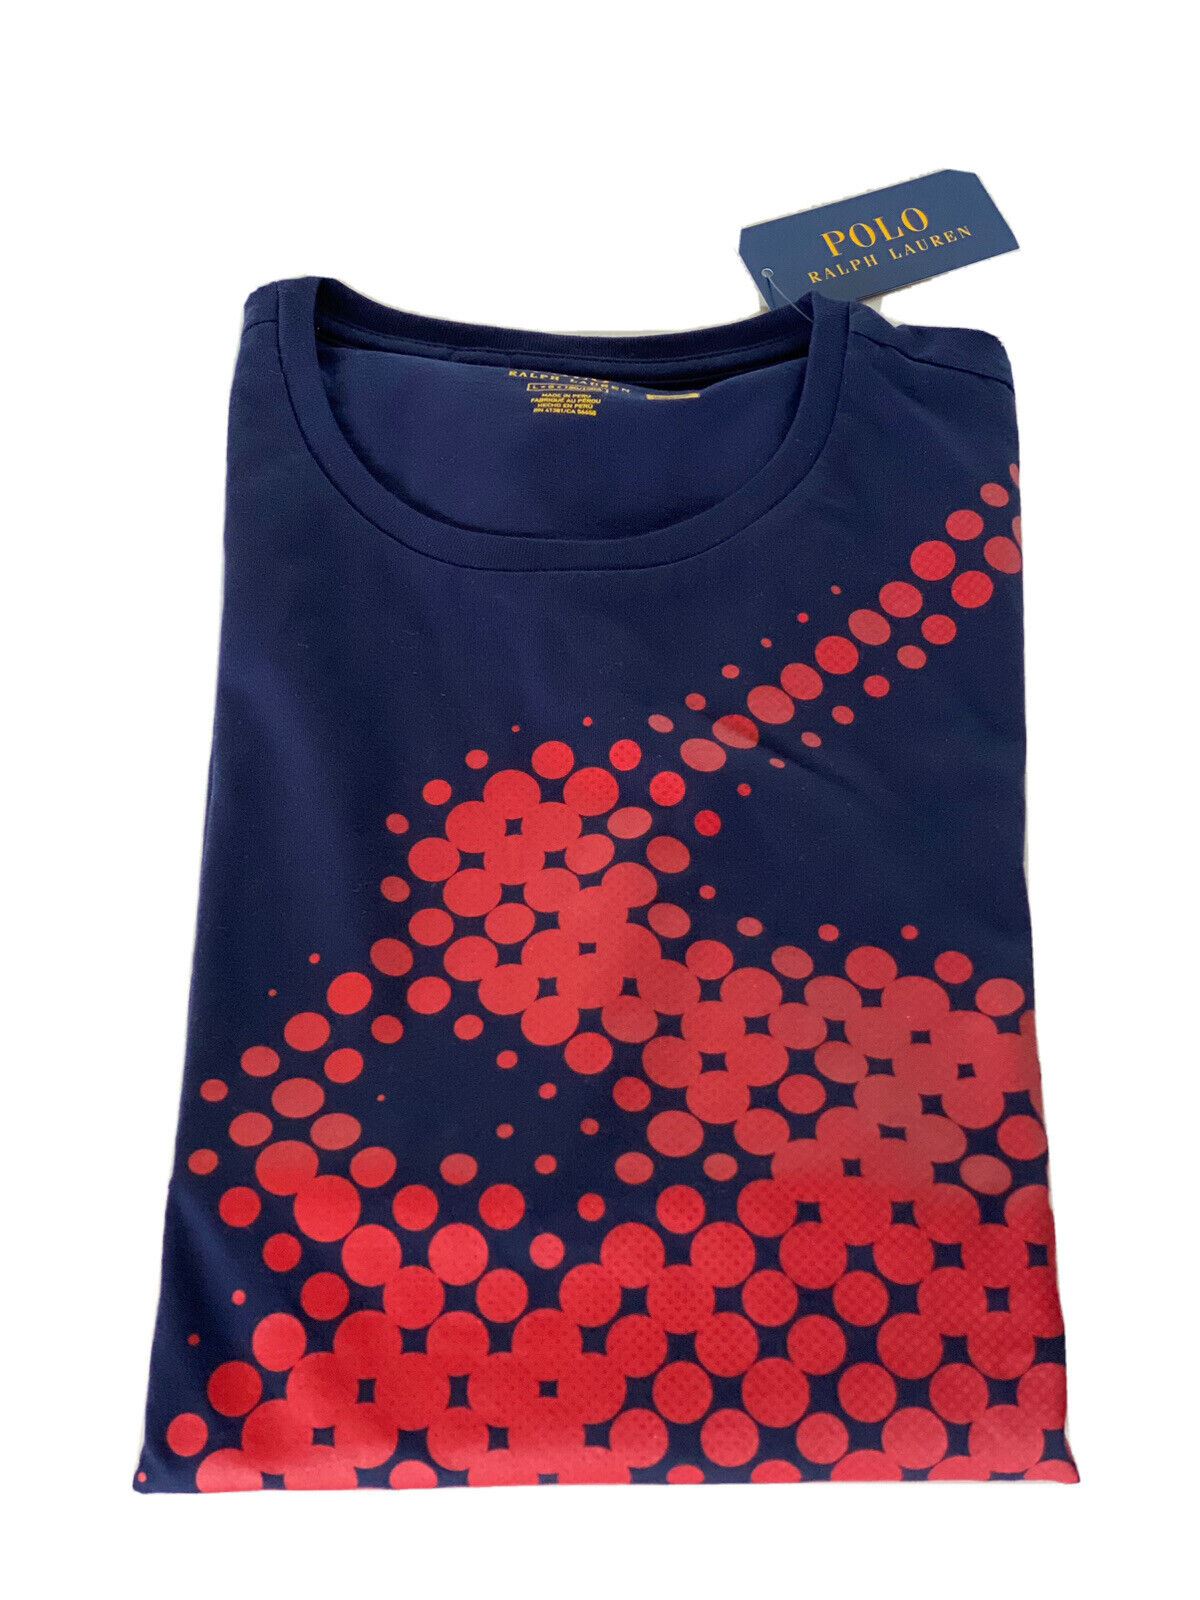 Neu mit Etikett: 65 $ Polo Ralph Lauren Kurzarm-Logo-T-Shirt Blau Large 